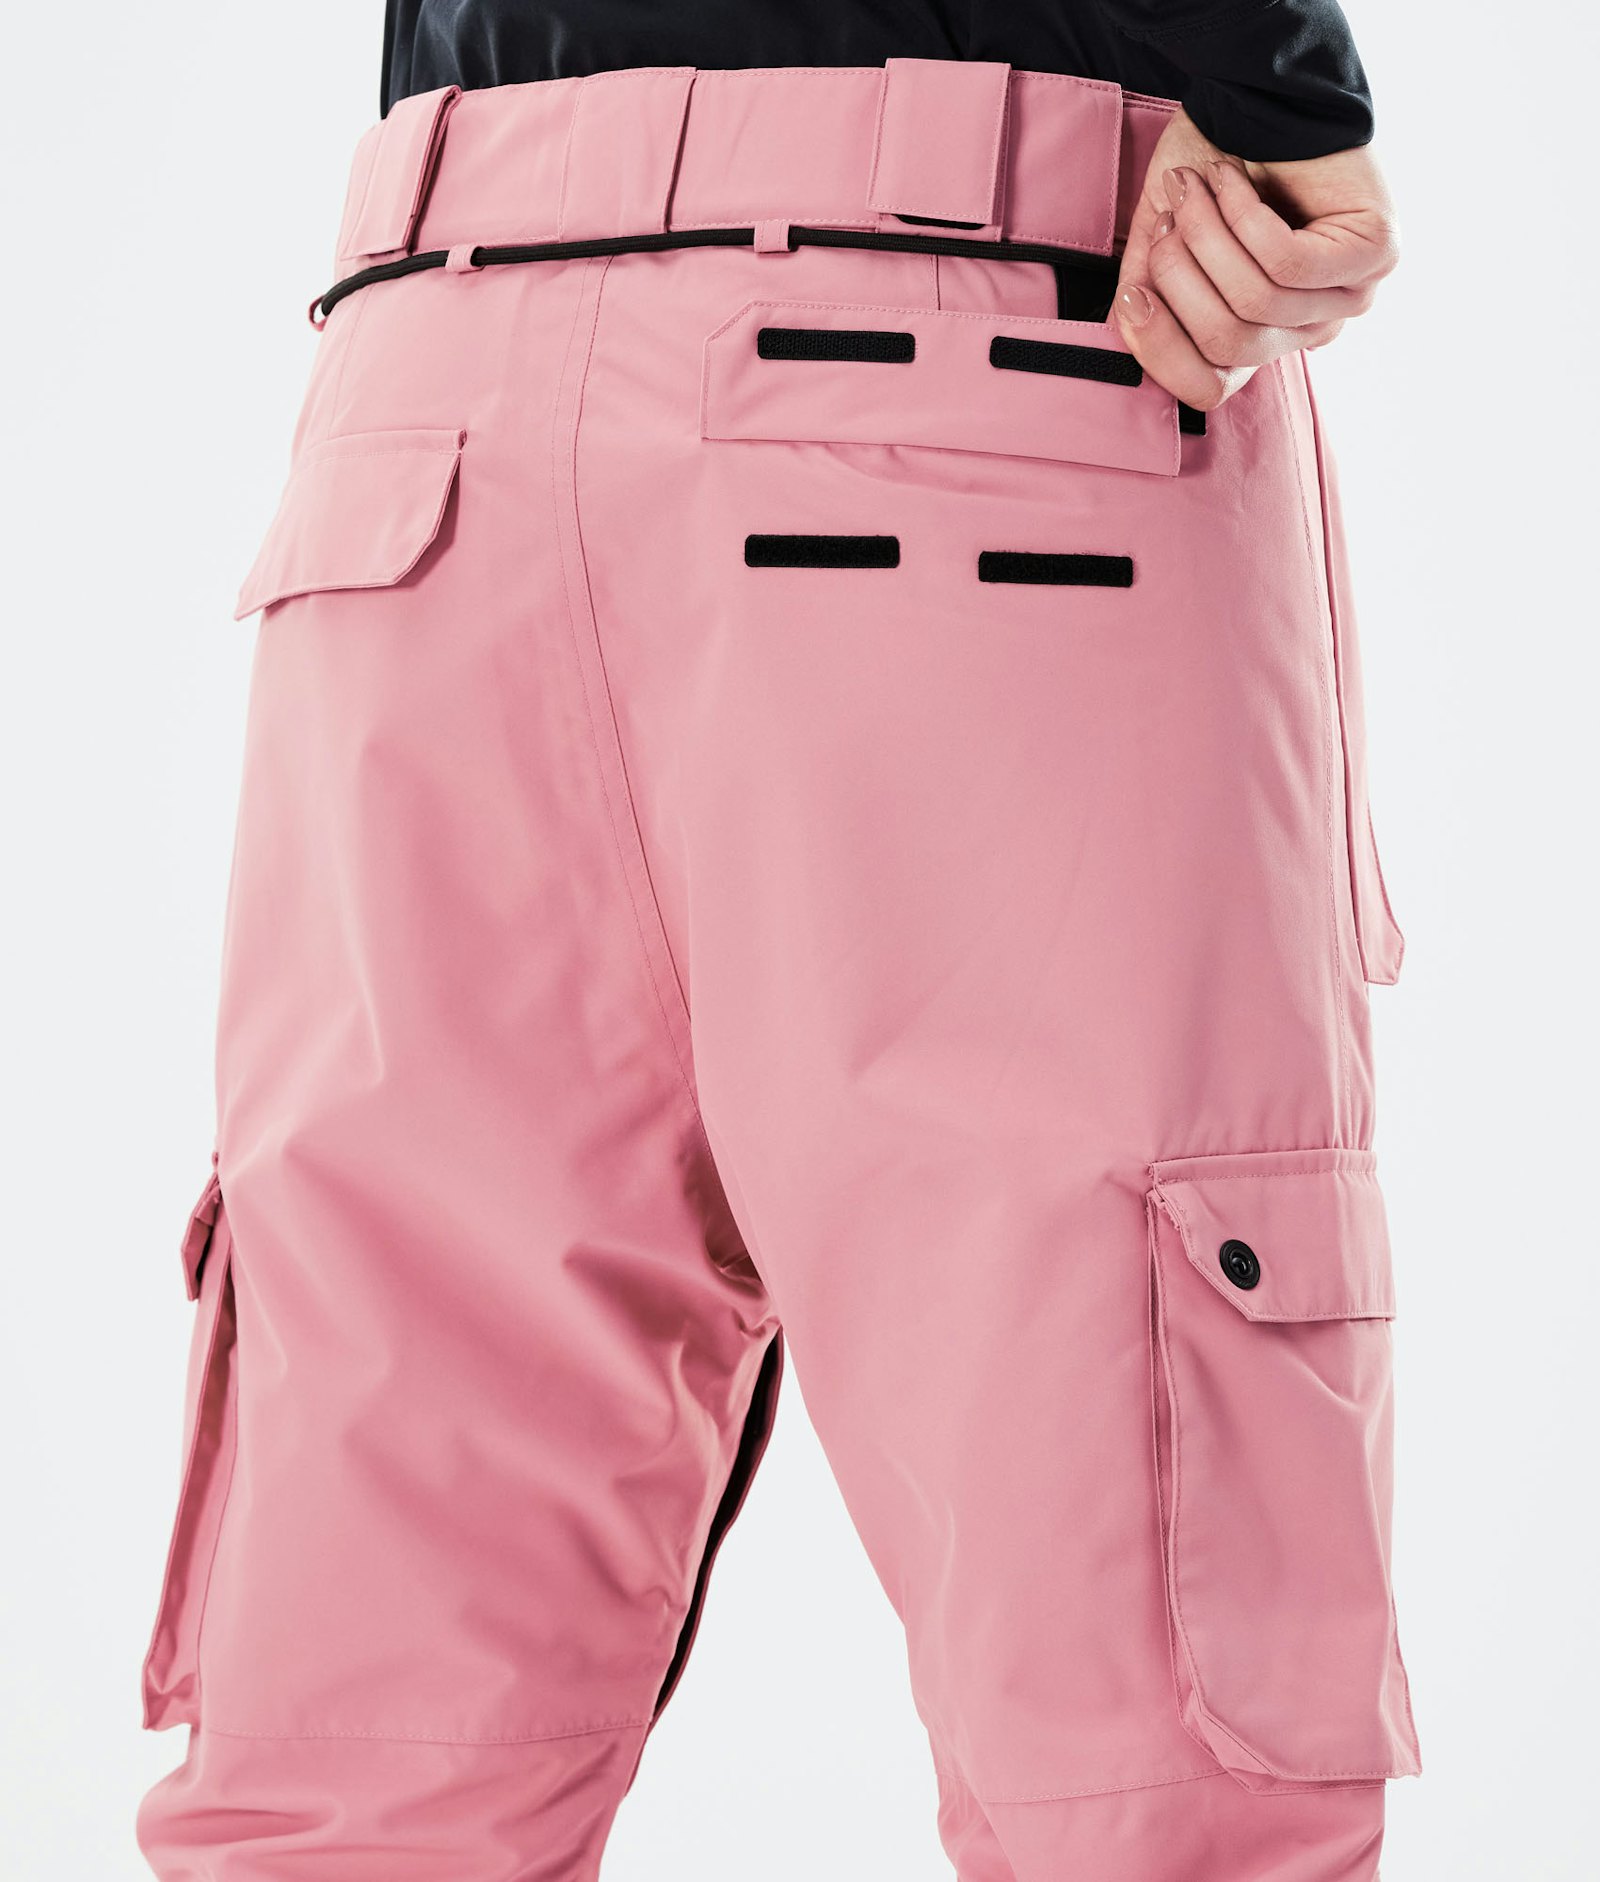 Iconic W 2021 Snowboard Pants Women Pink